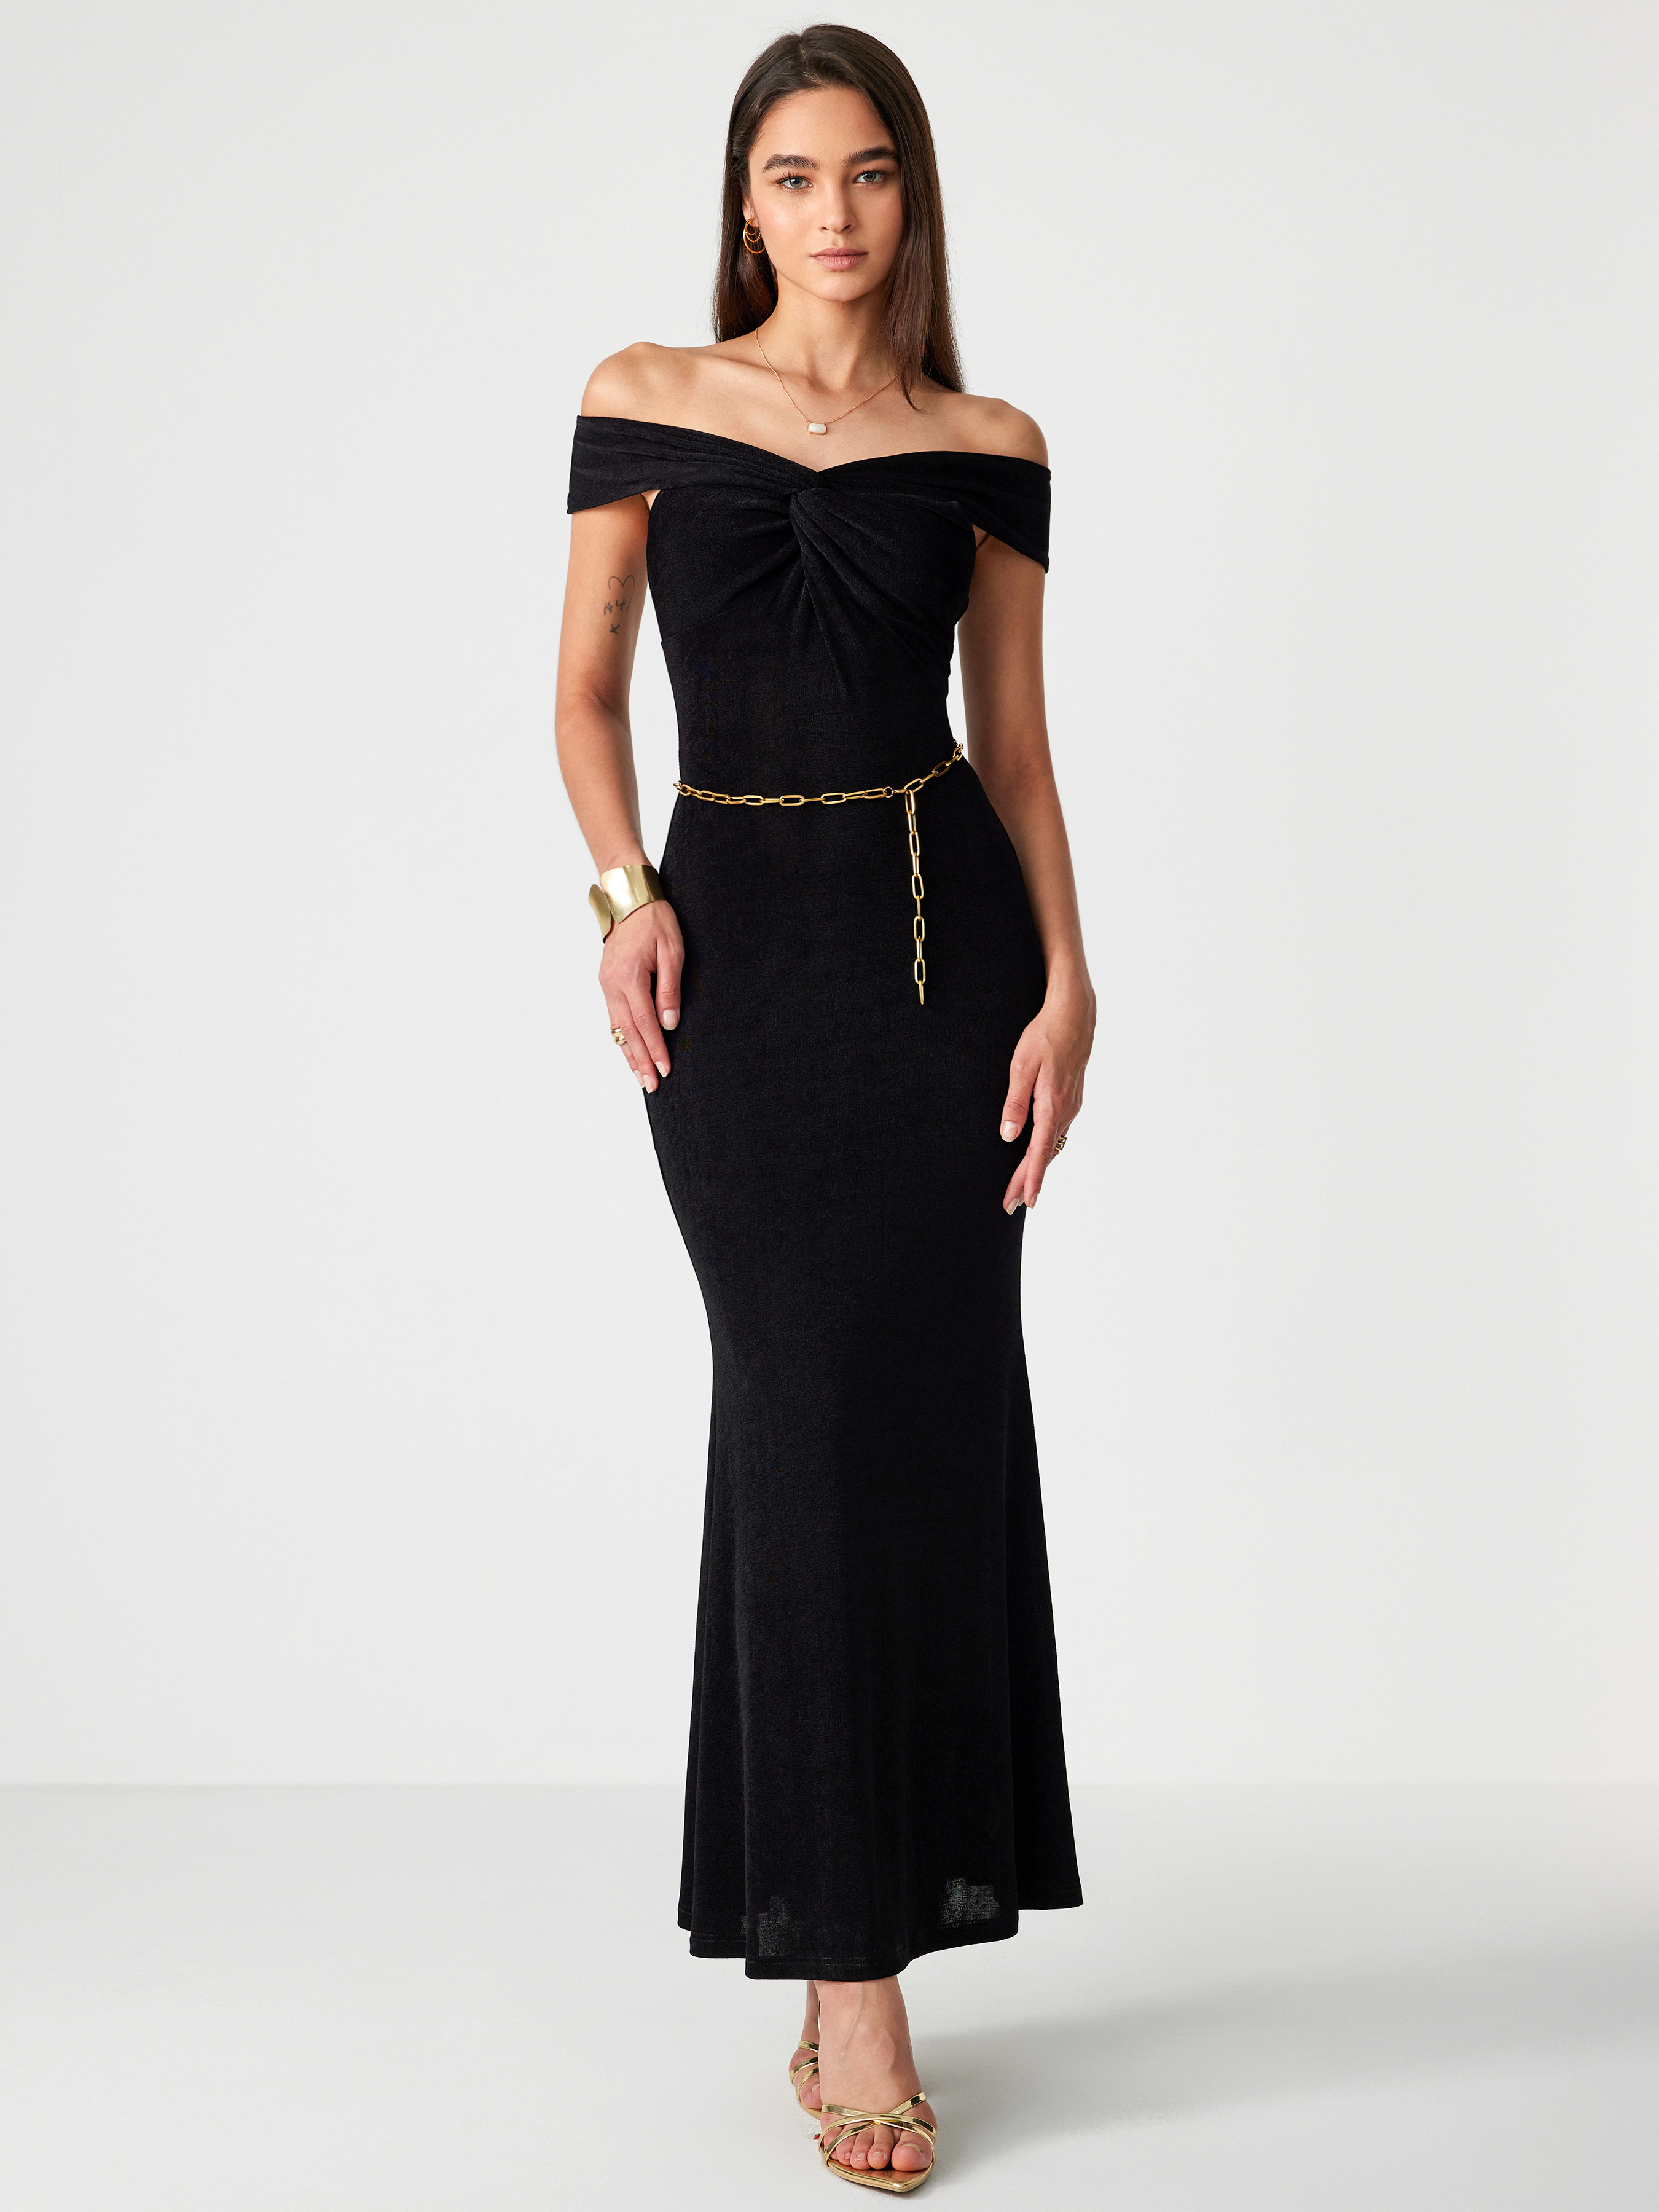 Roberto Cavalli Embellished Evening Dress - Janet Mandell